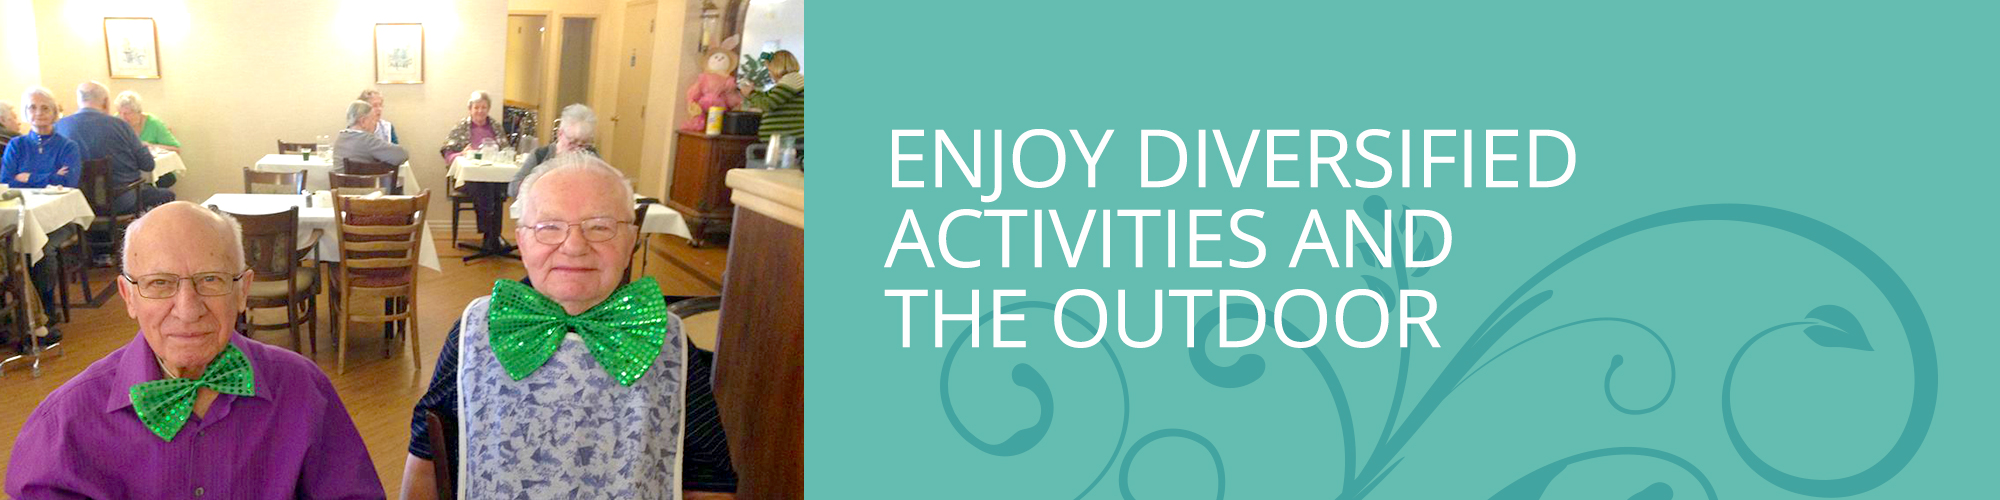 Enjoy diversified activities and the outdoor